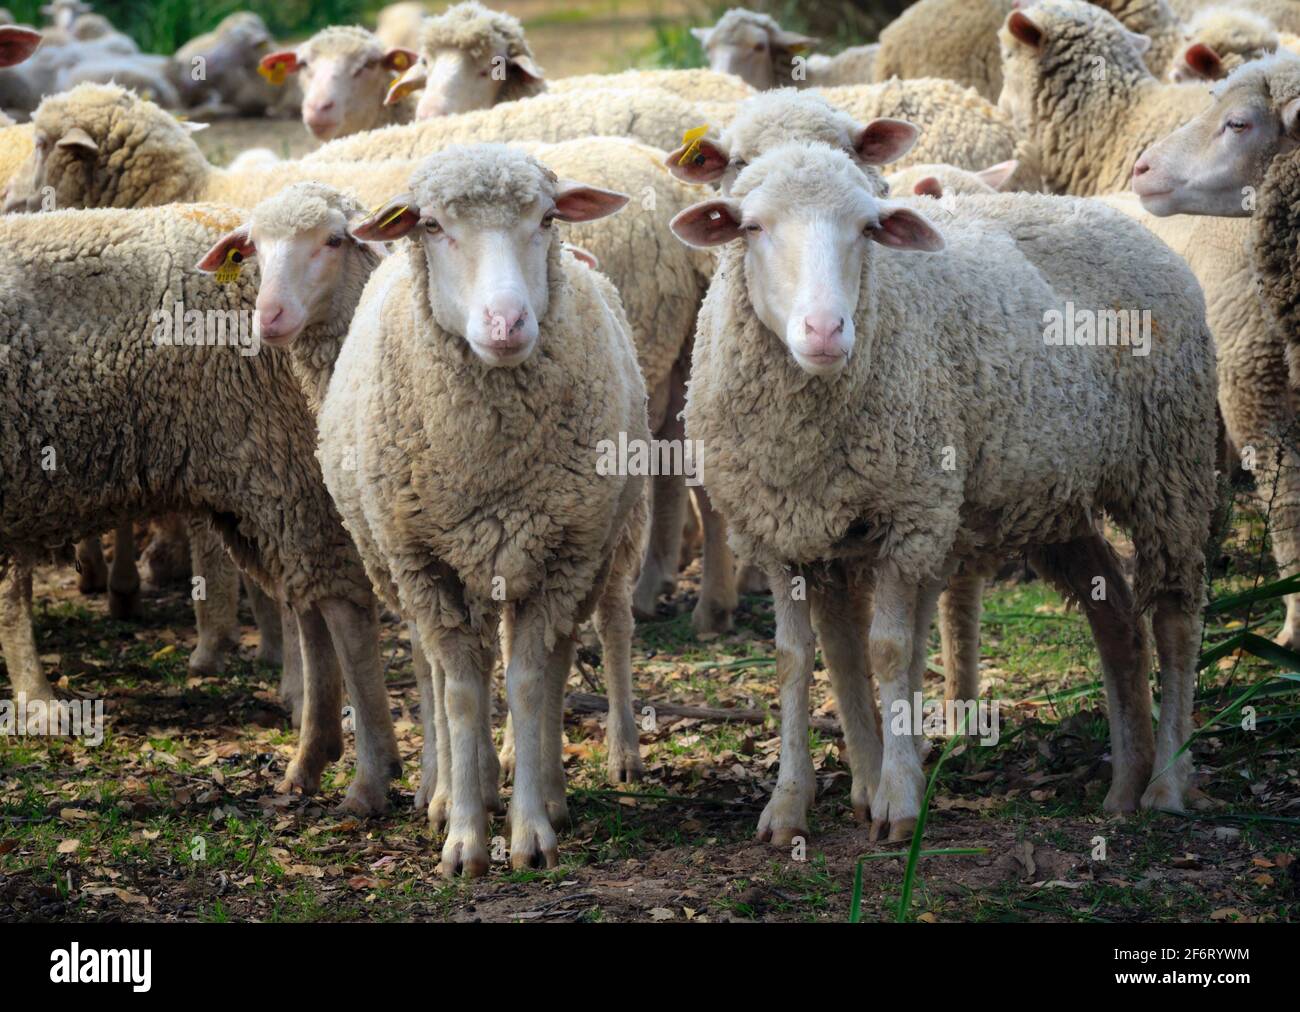 Rebaño de ovejas. Ovis aries. Foto de stock